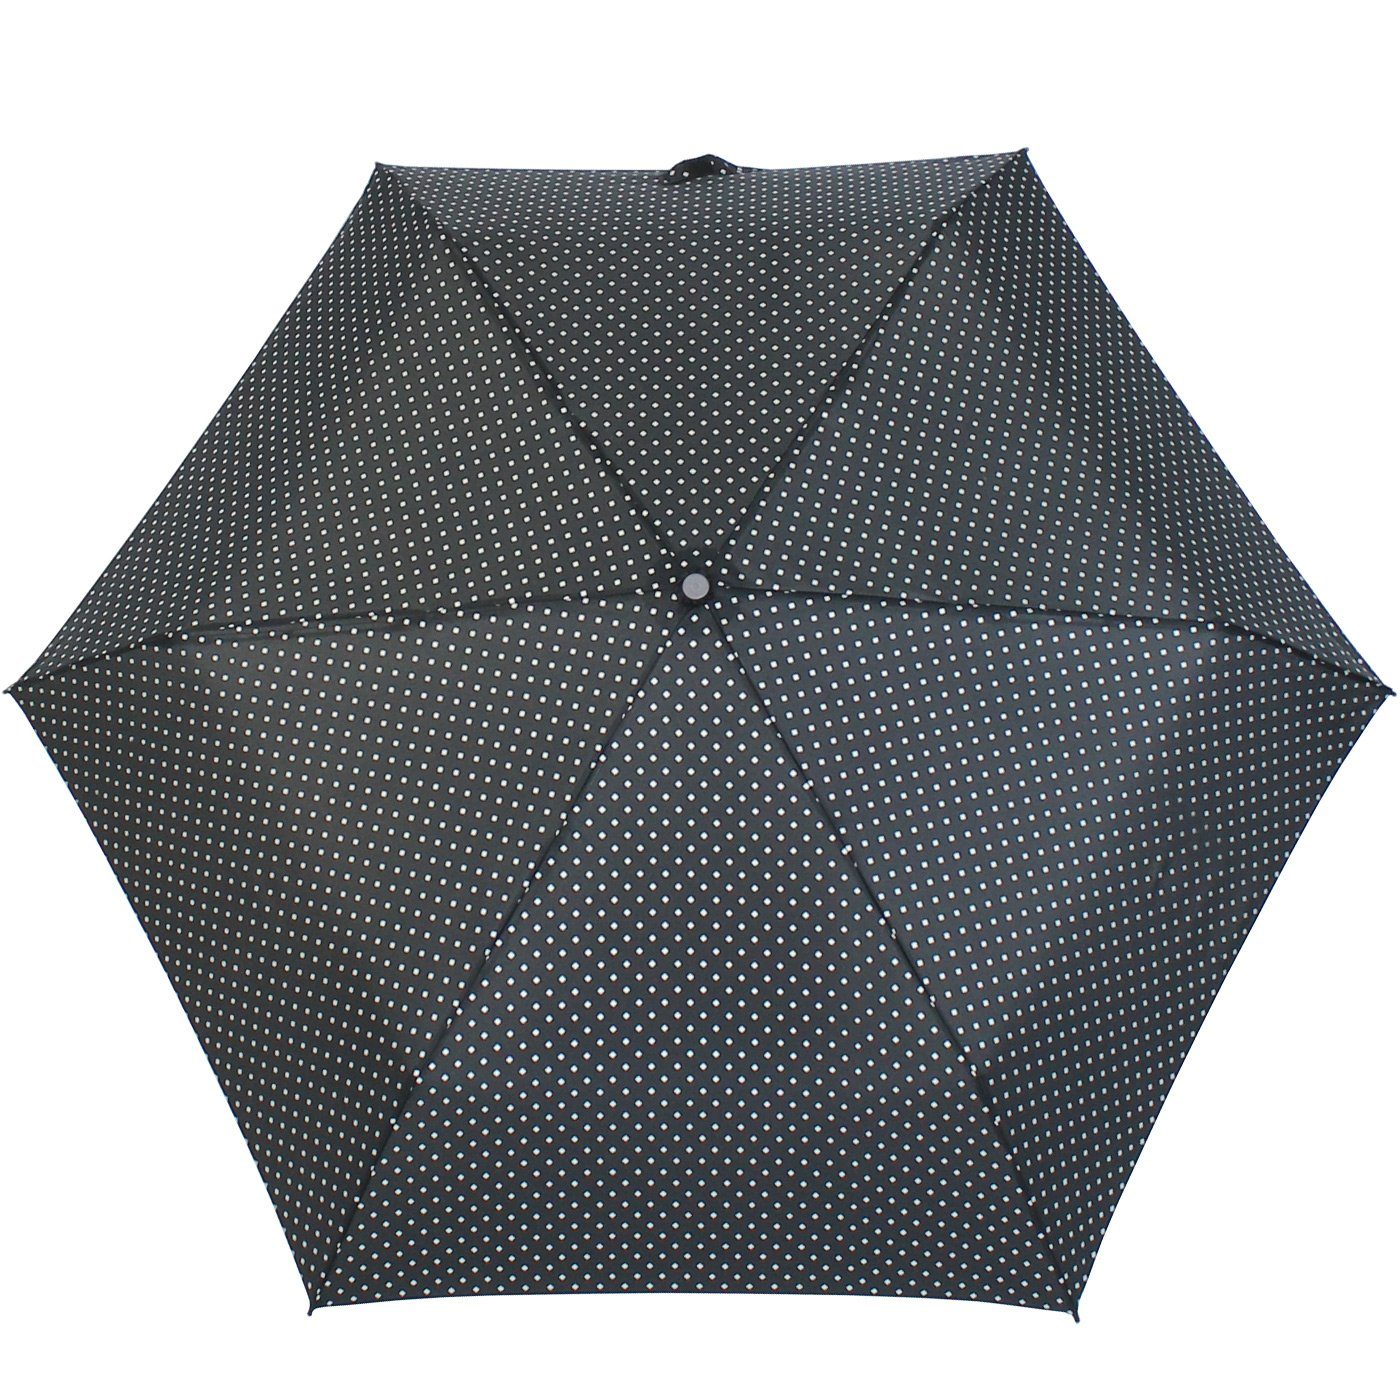 iX-brella Taschenregenschirm Schirm Mini Automatik UV-sensitiv Griff gepunktet UV-sensitiv